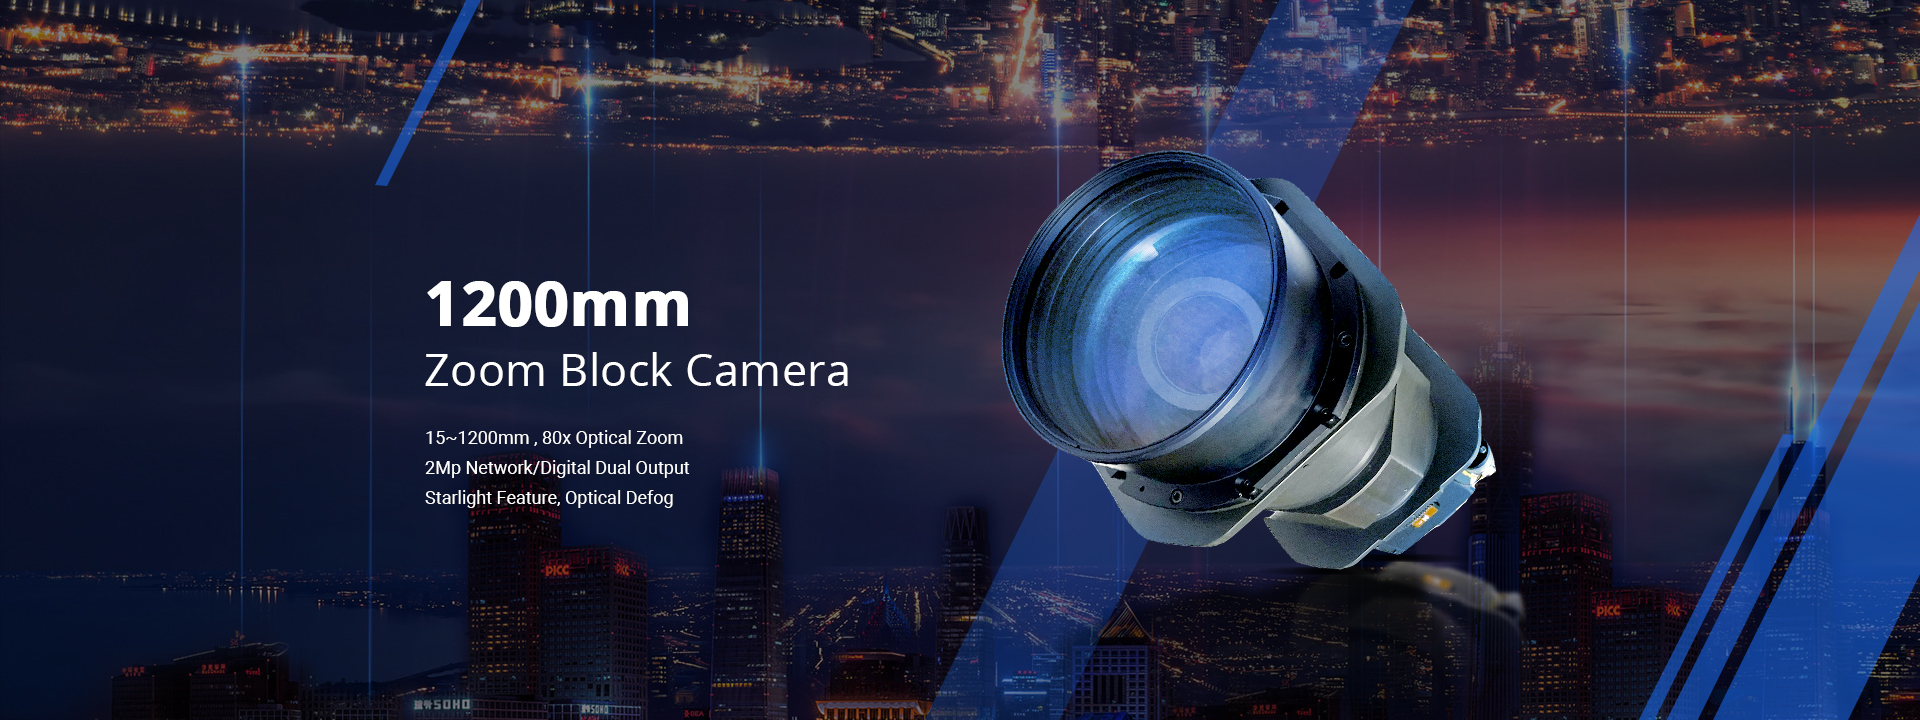 1200mm block camera